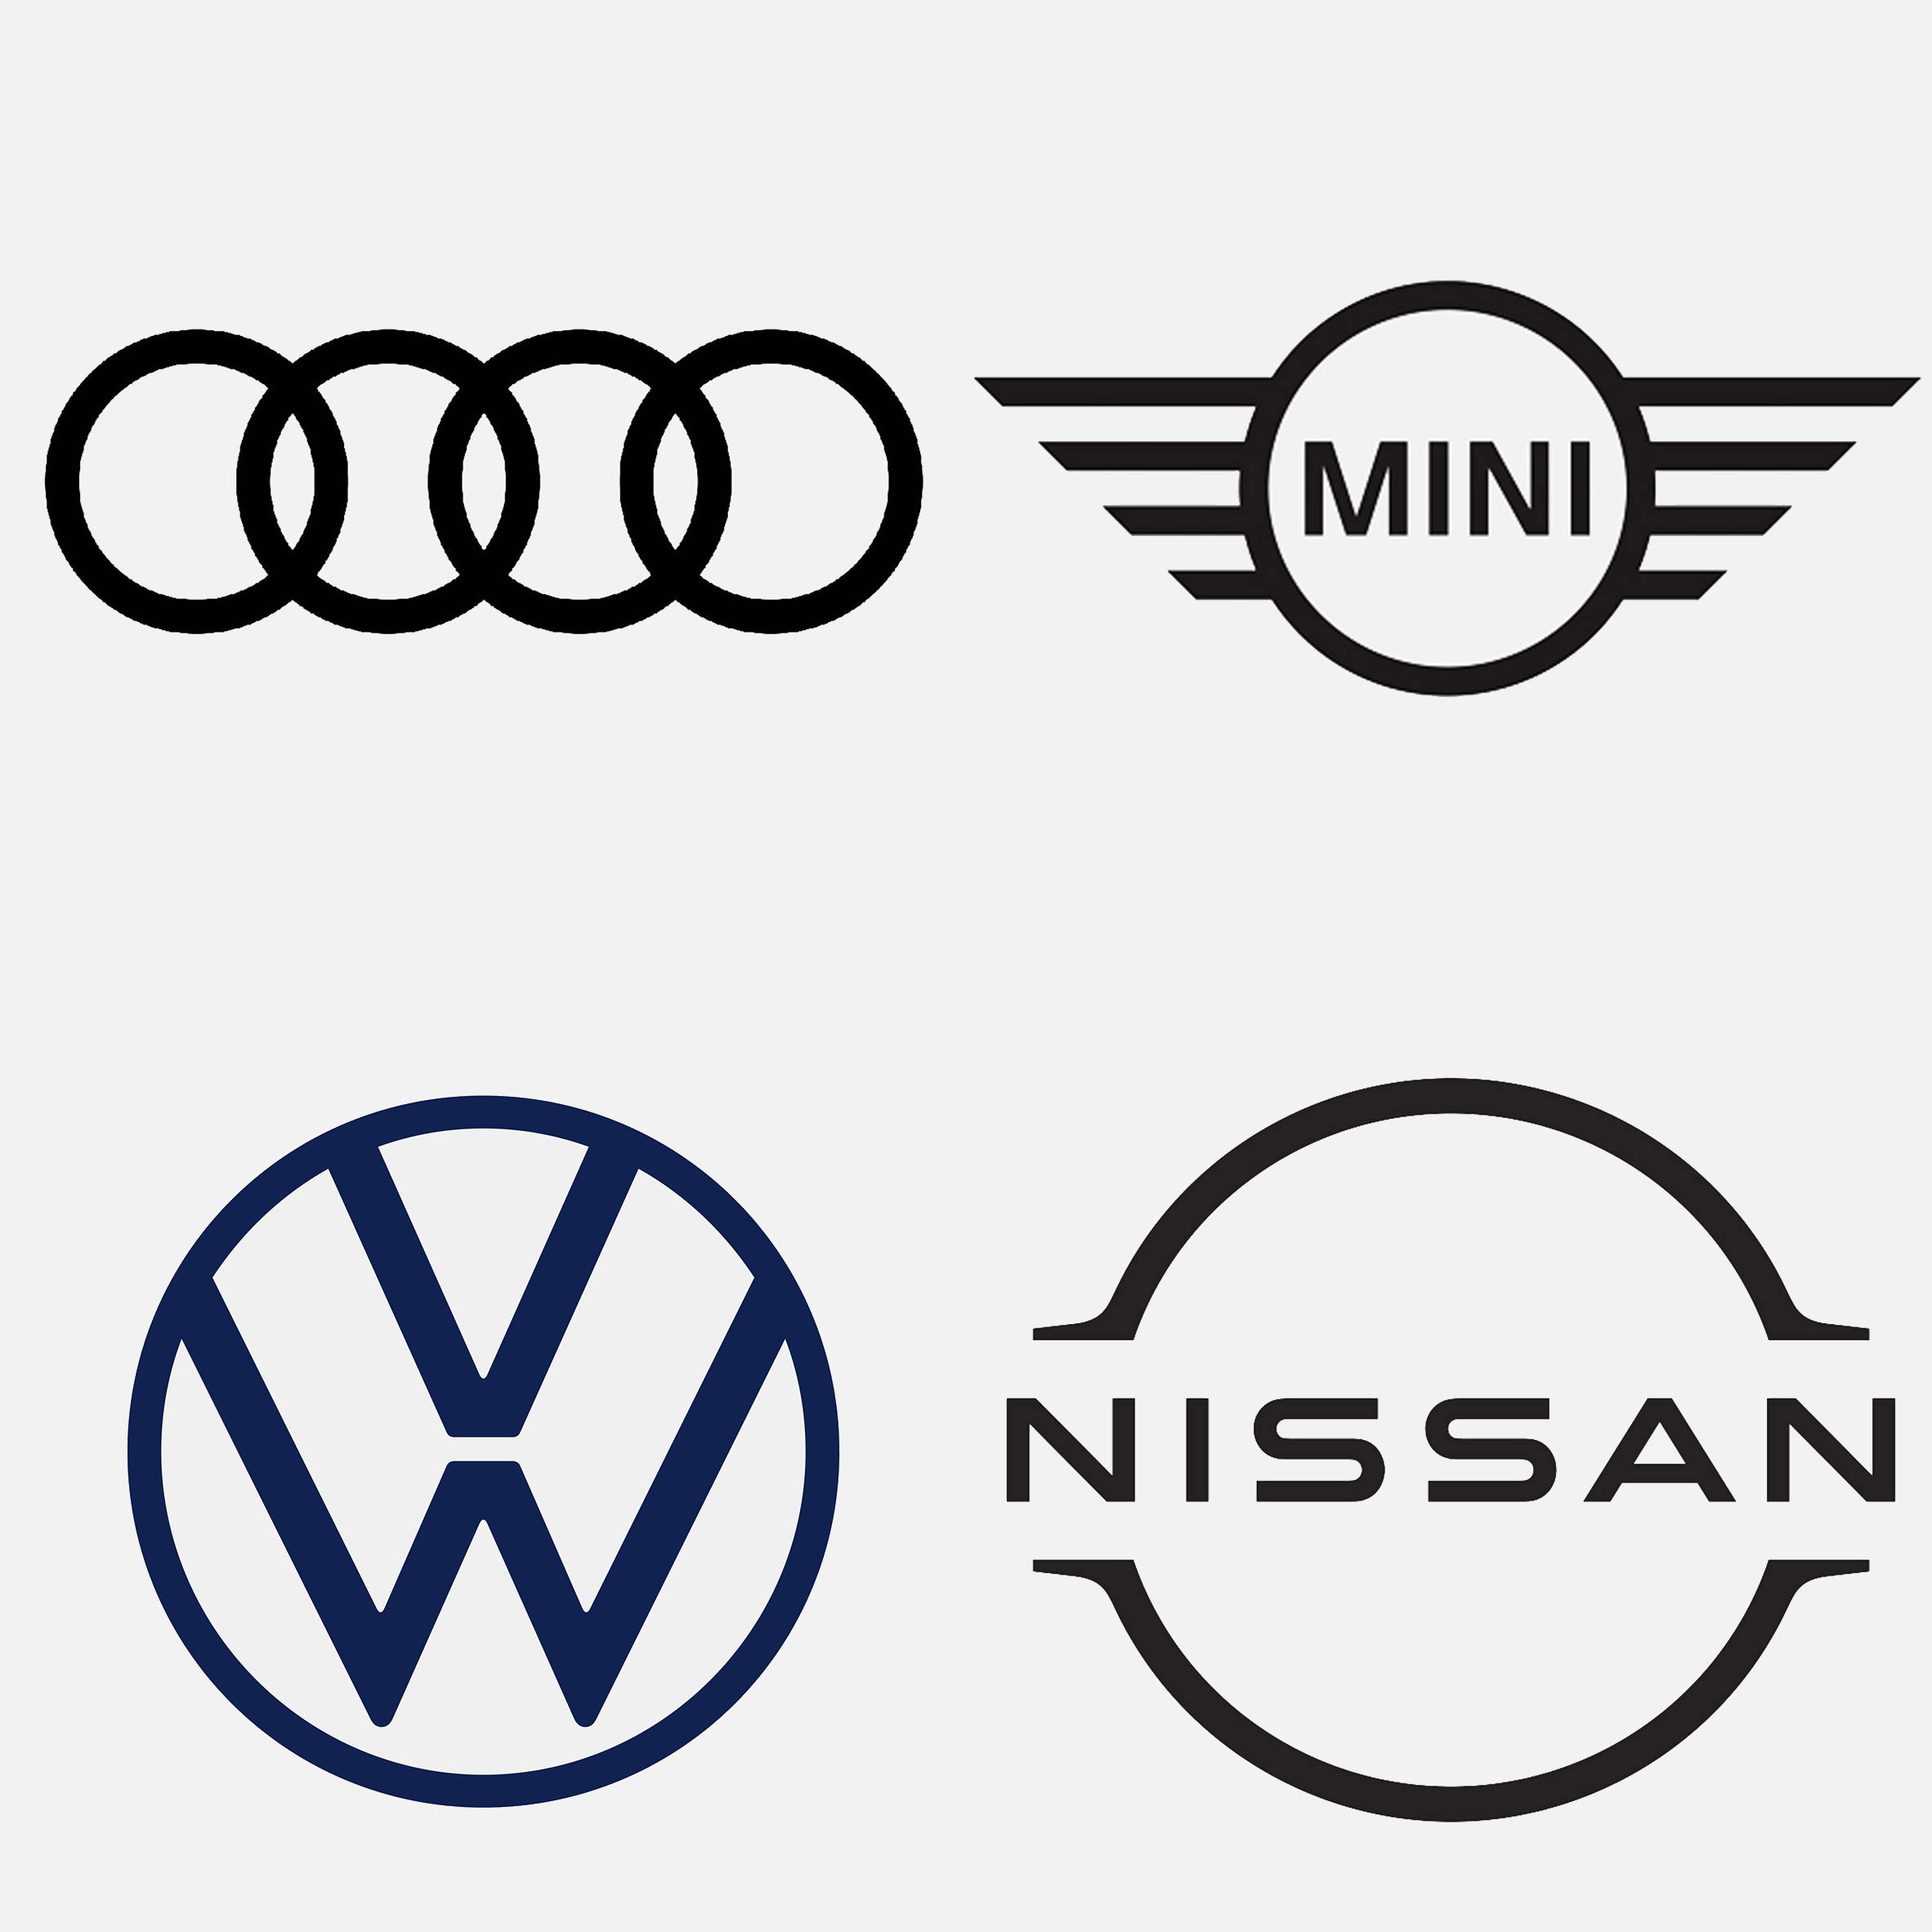 100,000 Car dealer logo Vector Images | Depositphotos